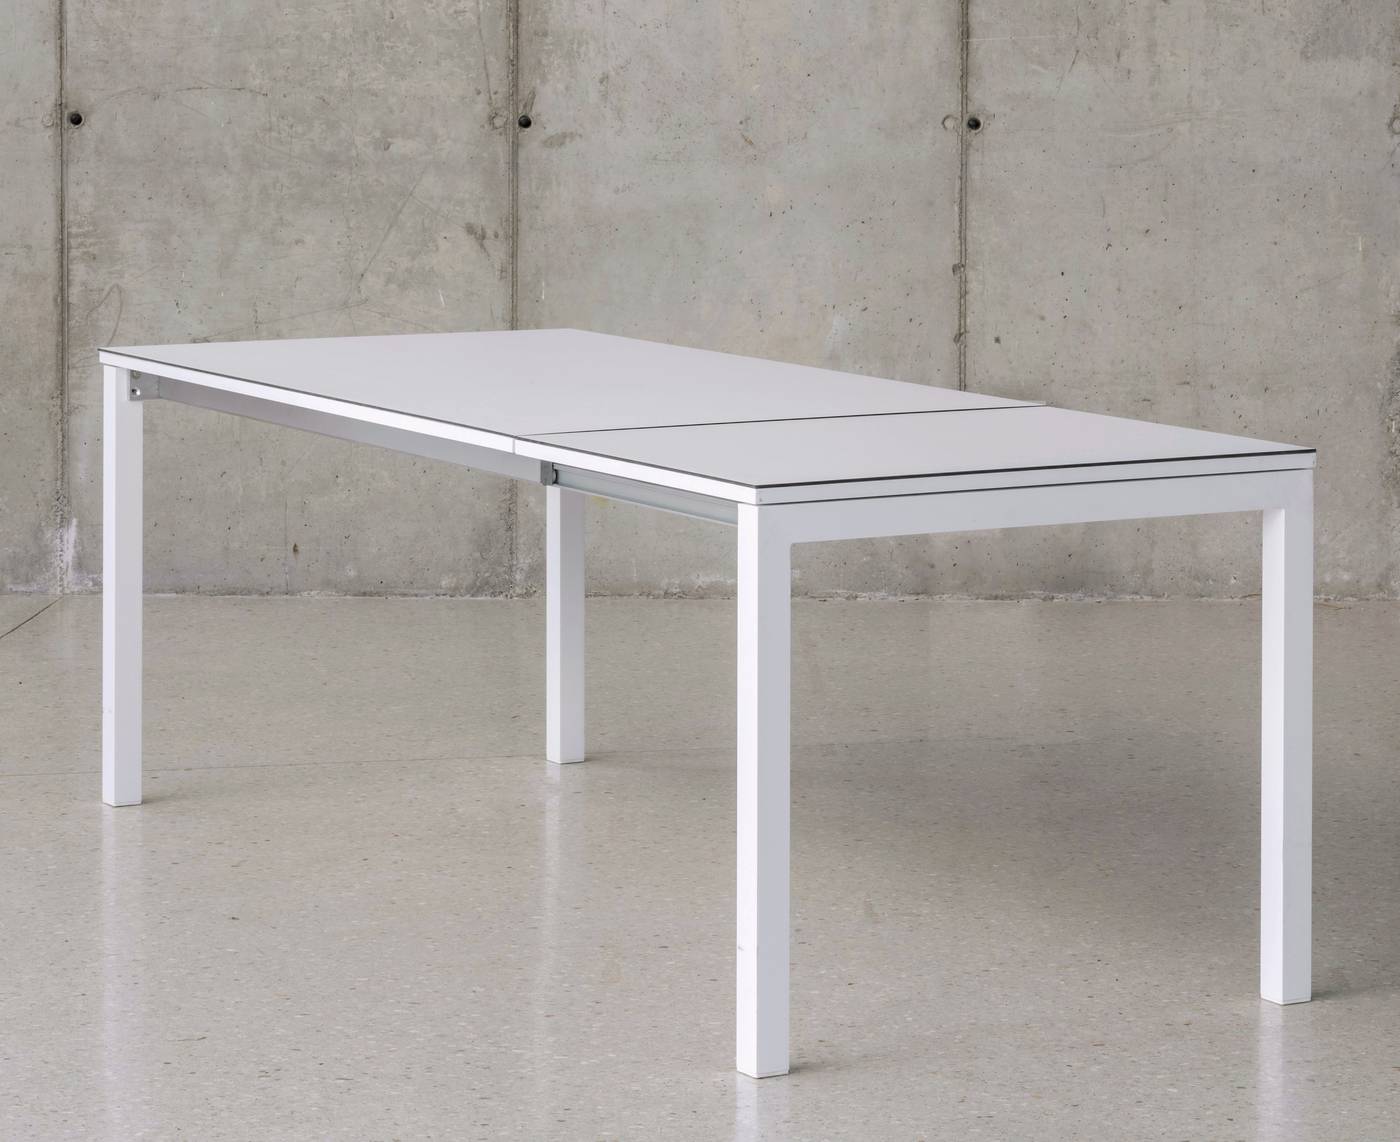 Mesa de 150cm extensible a 215cm, con tablero de HPL ultra resistente. Estructura aluminio color blanco o antracita.